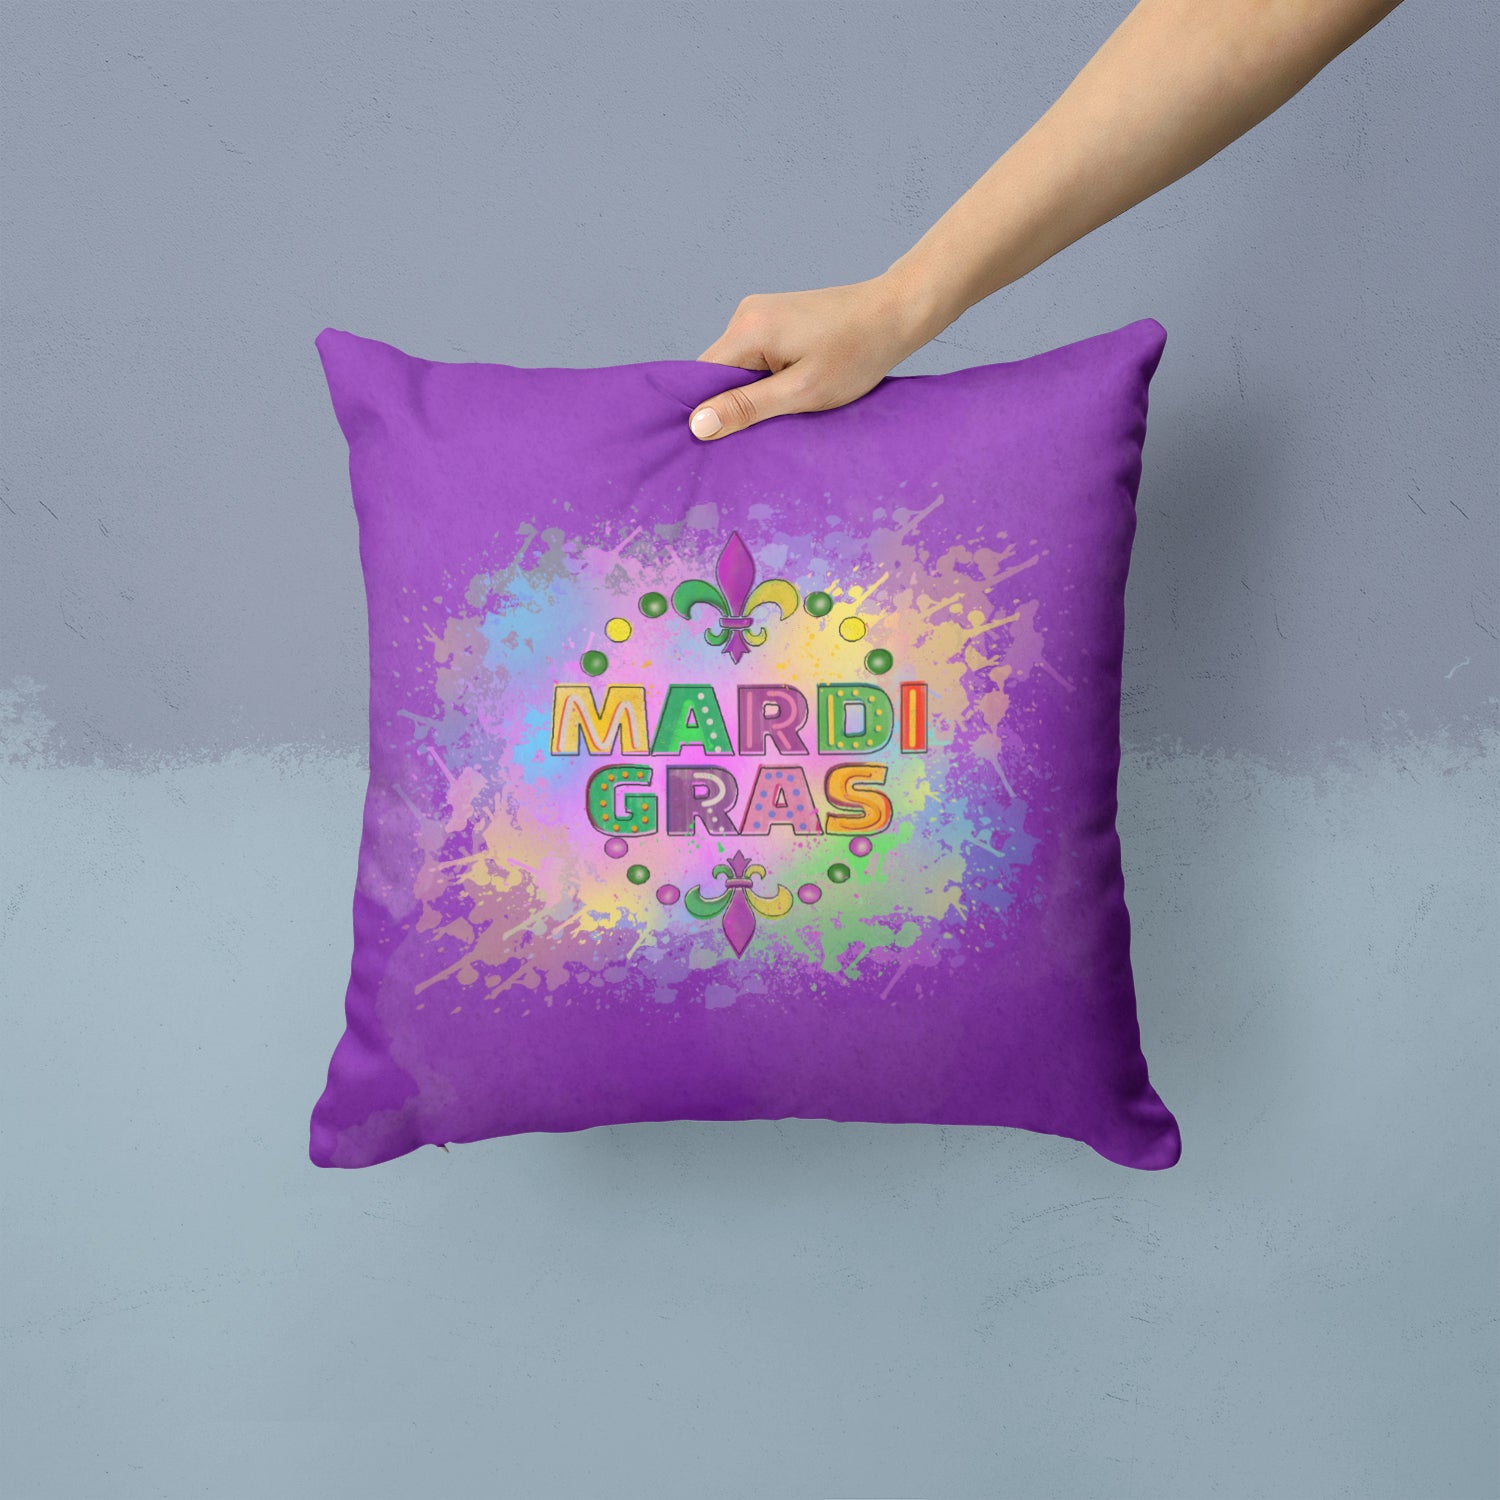 Buy this Mardi Gras Fabric Decorative Pillow